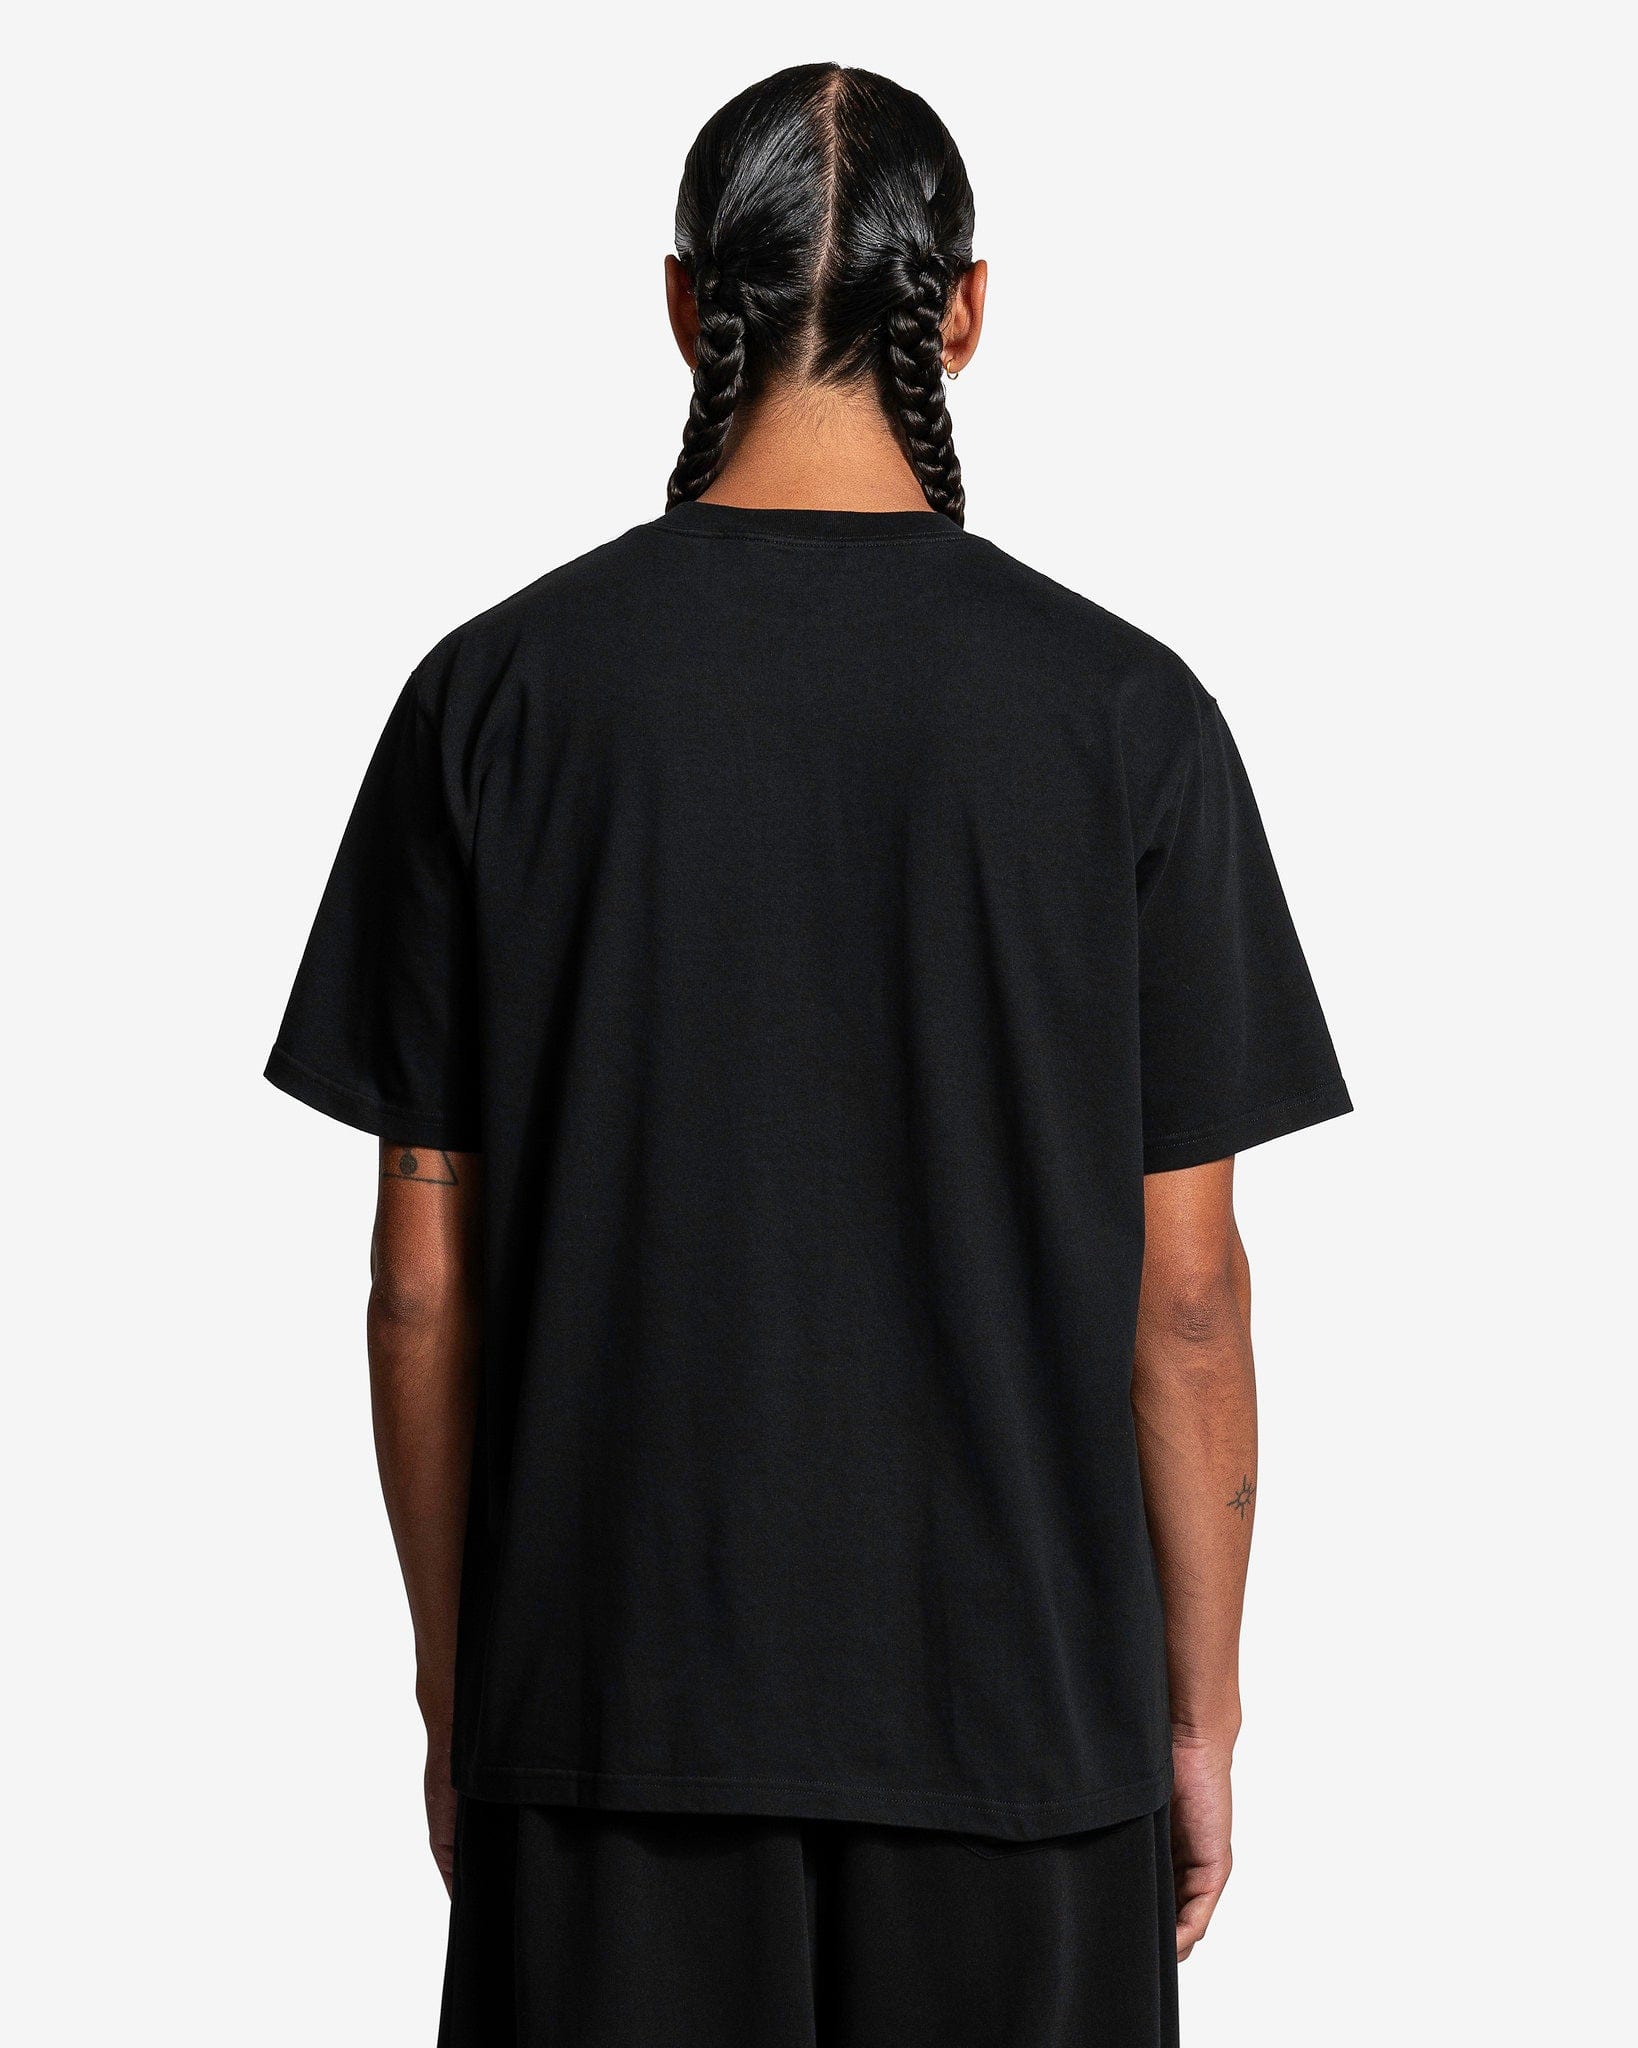 LU'U DAN Men's T-Shirts 'Snake In The City' Graphic T-Shirt in Black